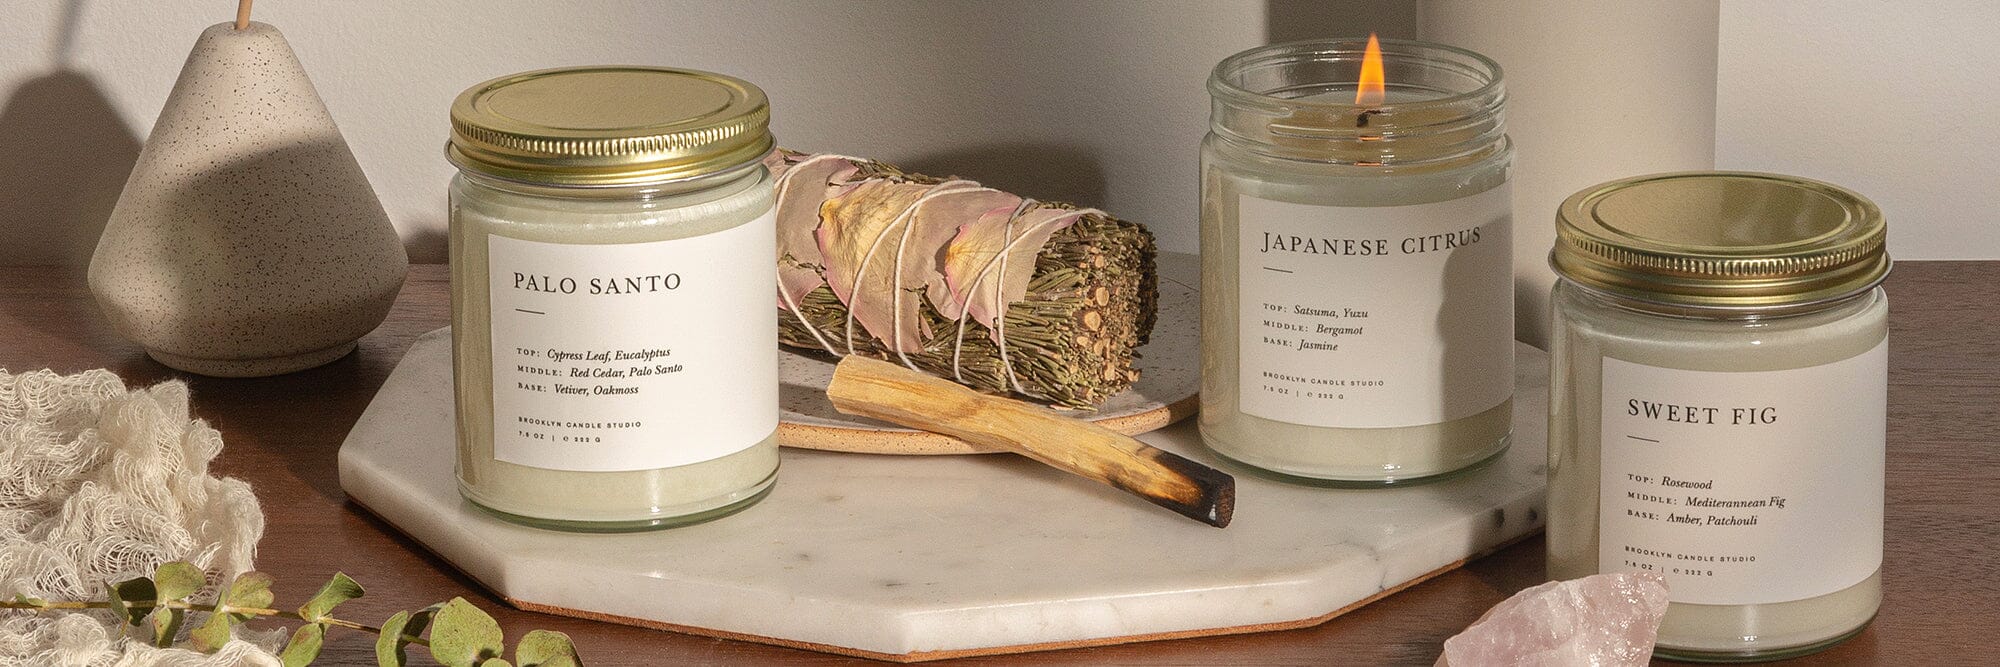 JASMINE by Alatreyu  Coconut & Soy Wax Candle, Handmade in Brooklyn